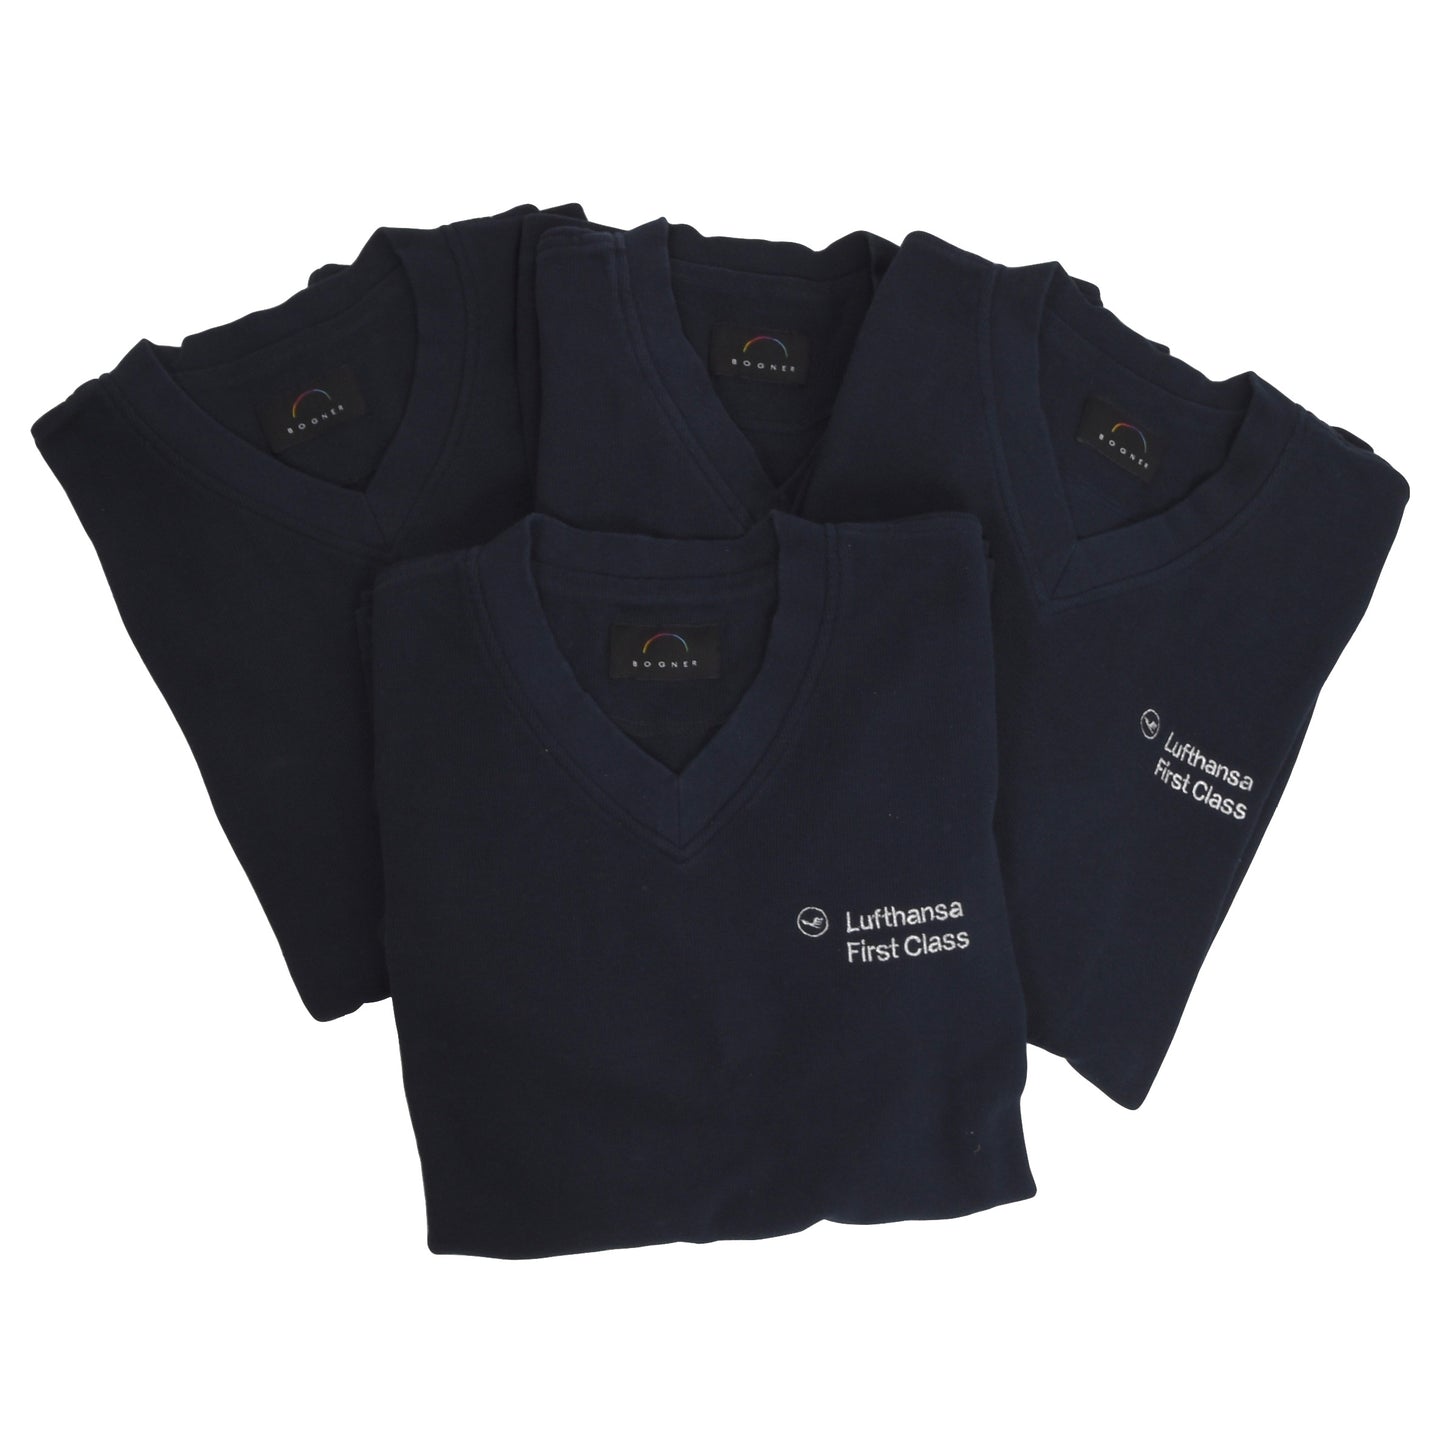 Bogner for Lufthansa First Class Cotton Sweatshirt/Top Size 54 - Navy Blue